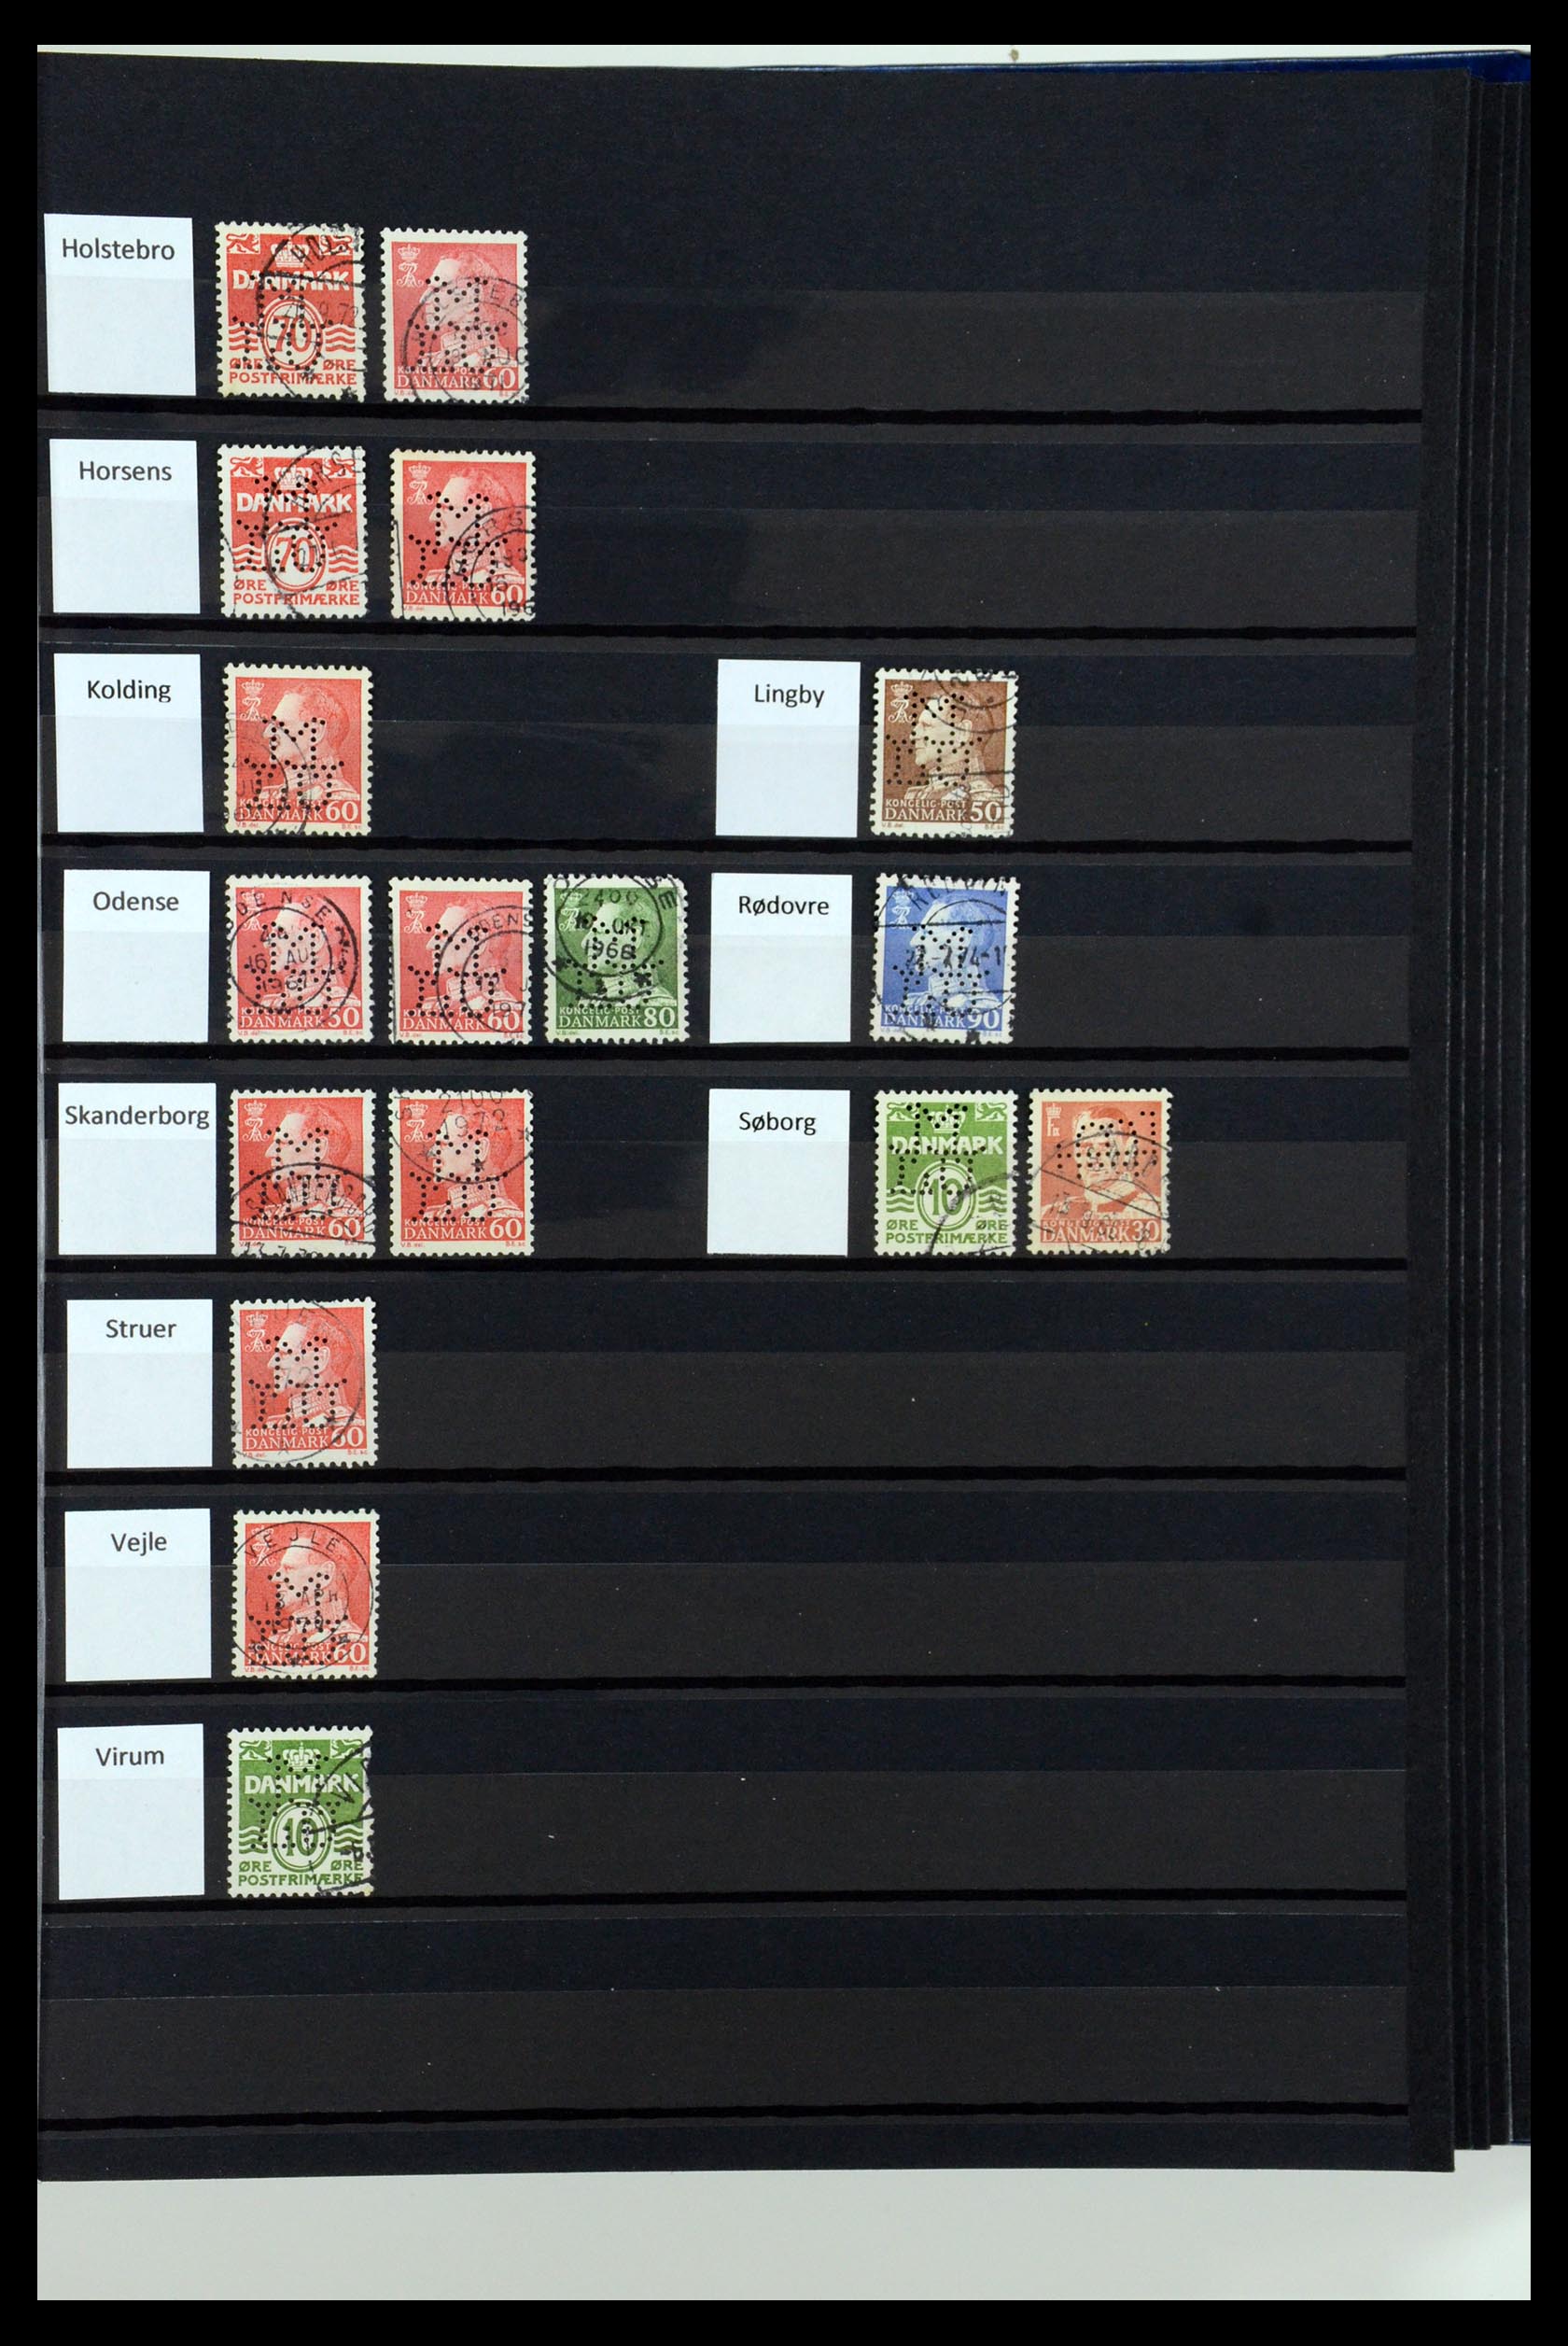 36396 096 - Stamp collection 36396 Denmark perfins.